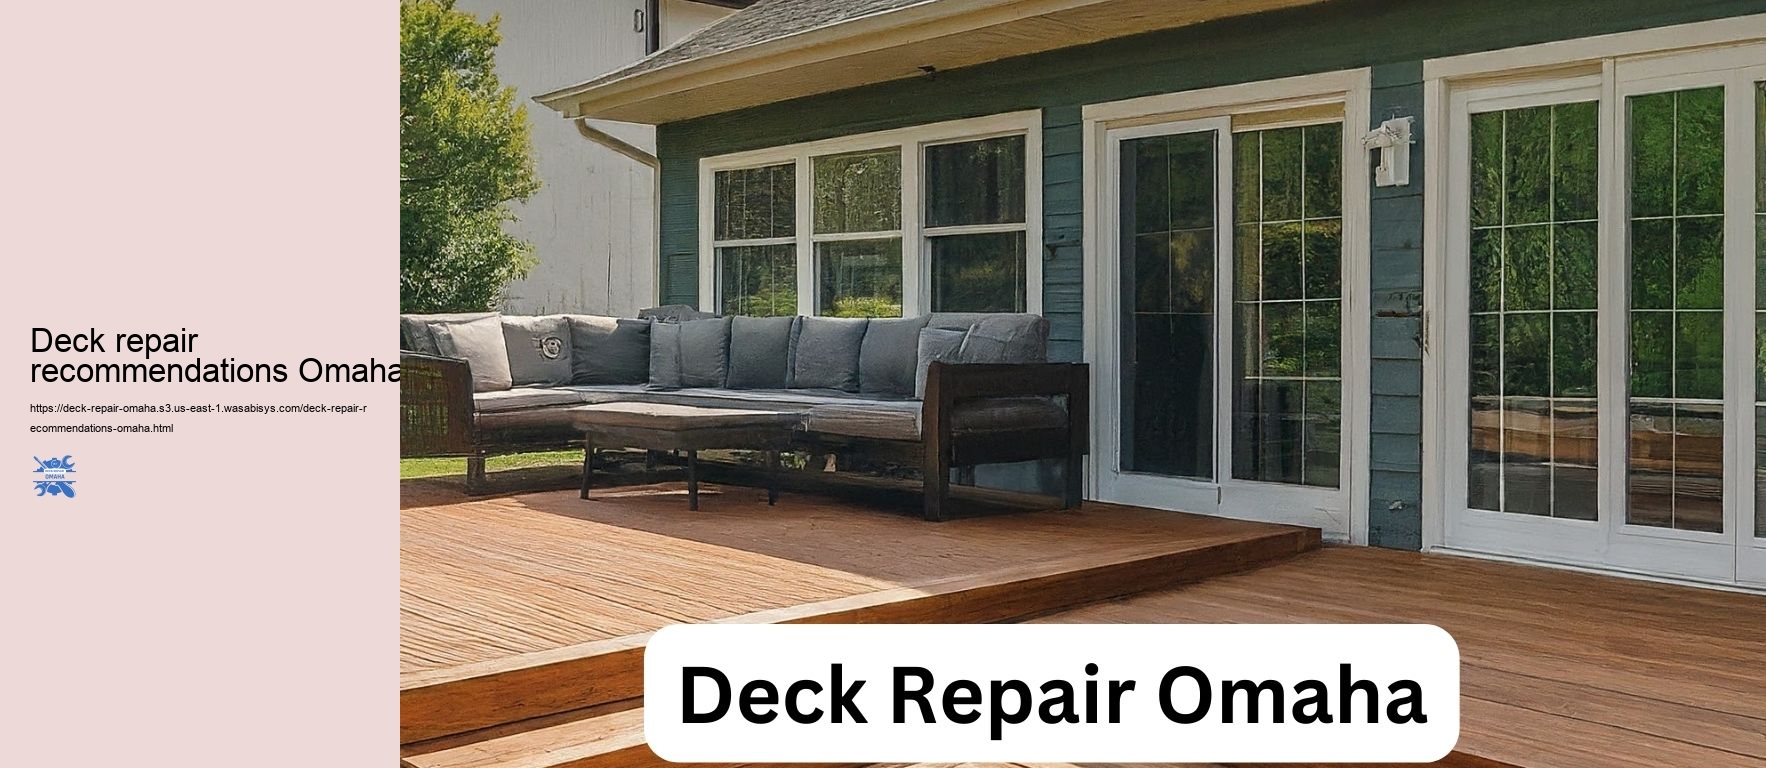 Deck repair recommendations Omaha